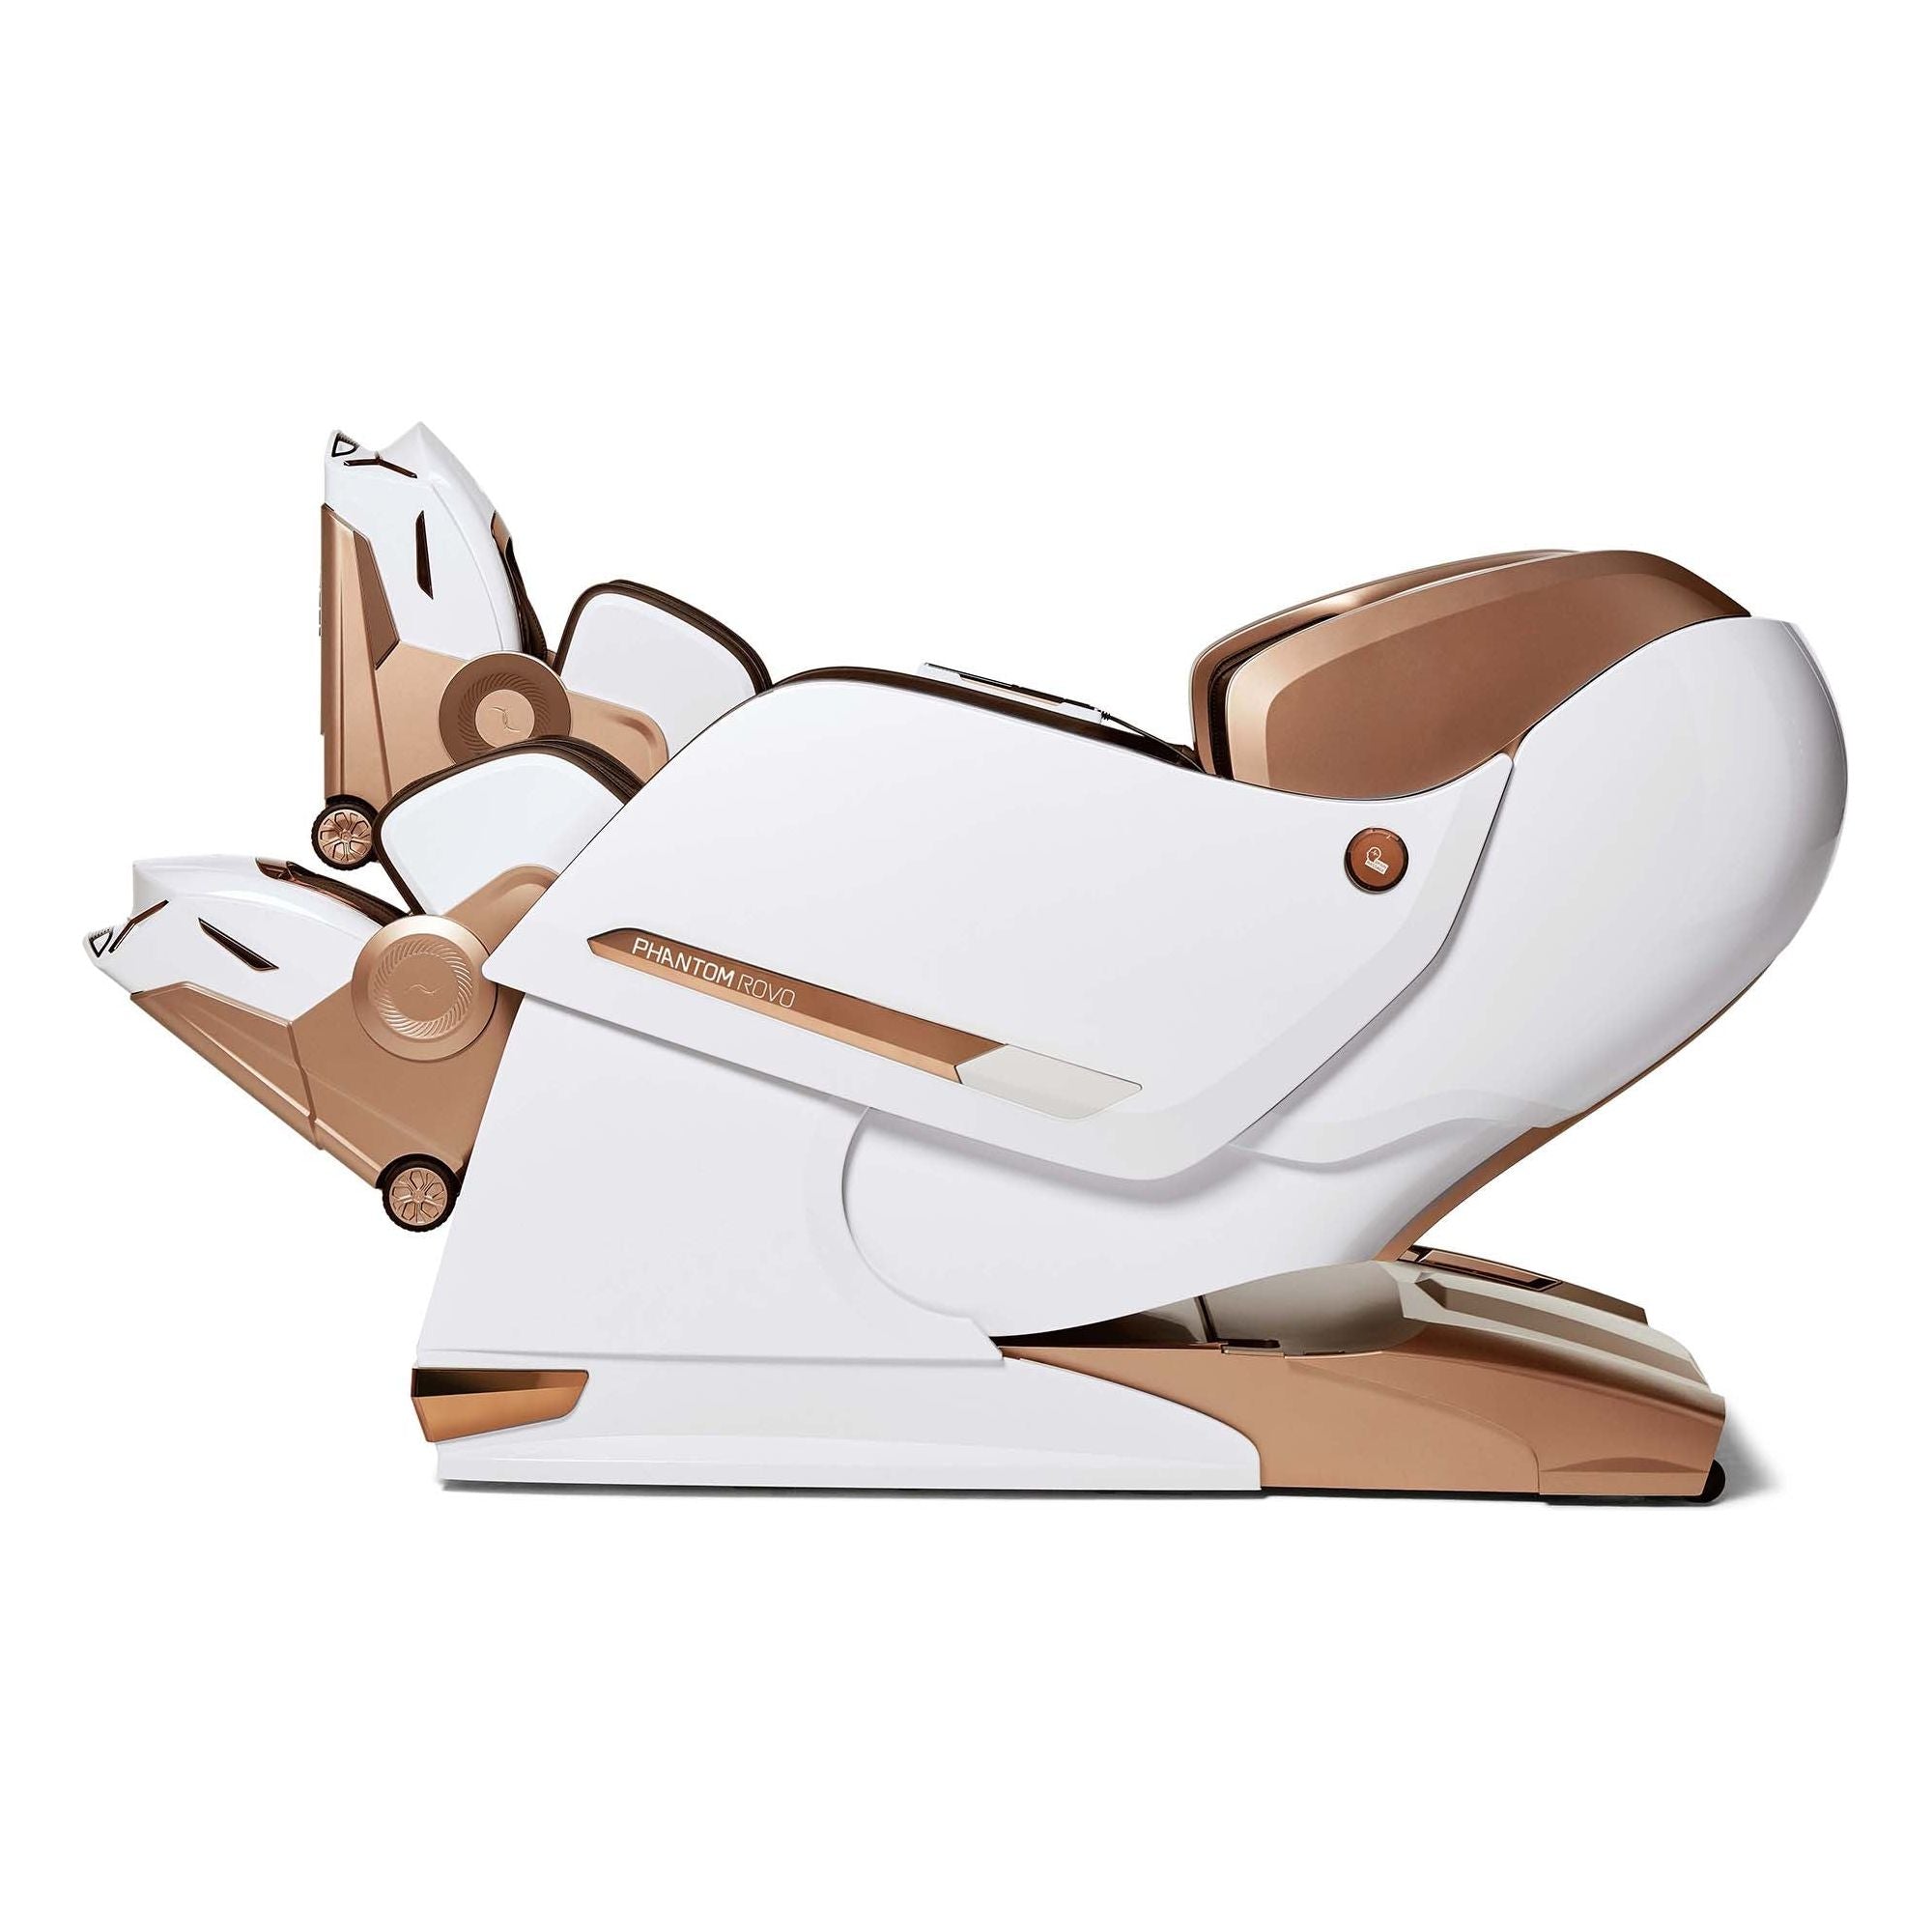 Bodyfriend Phantom Rovo Massage Chair lef side